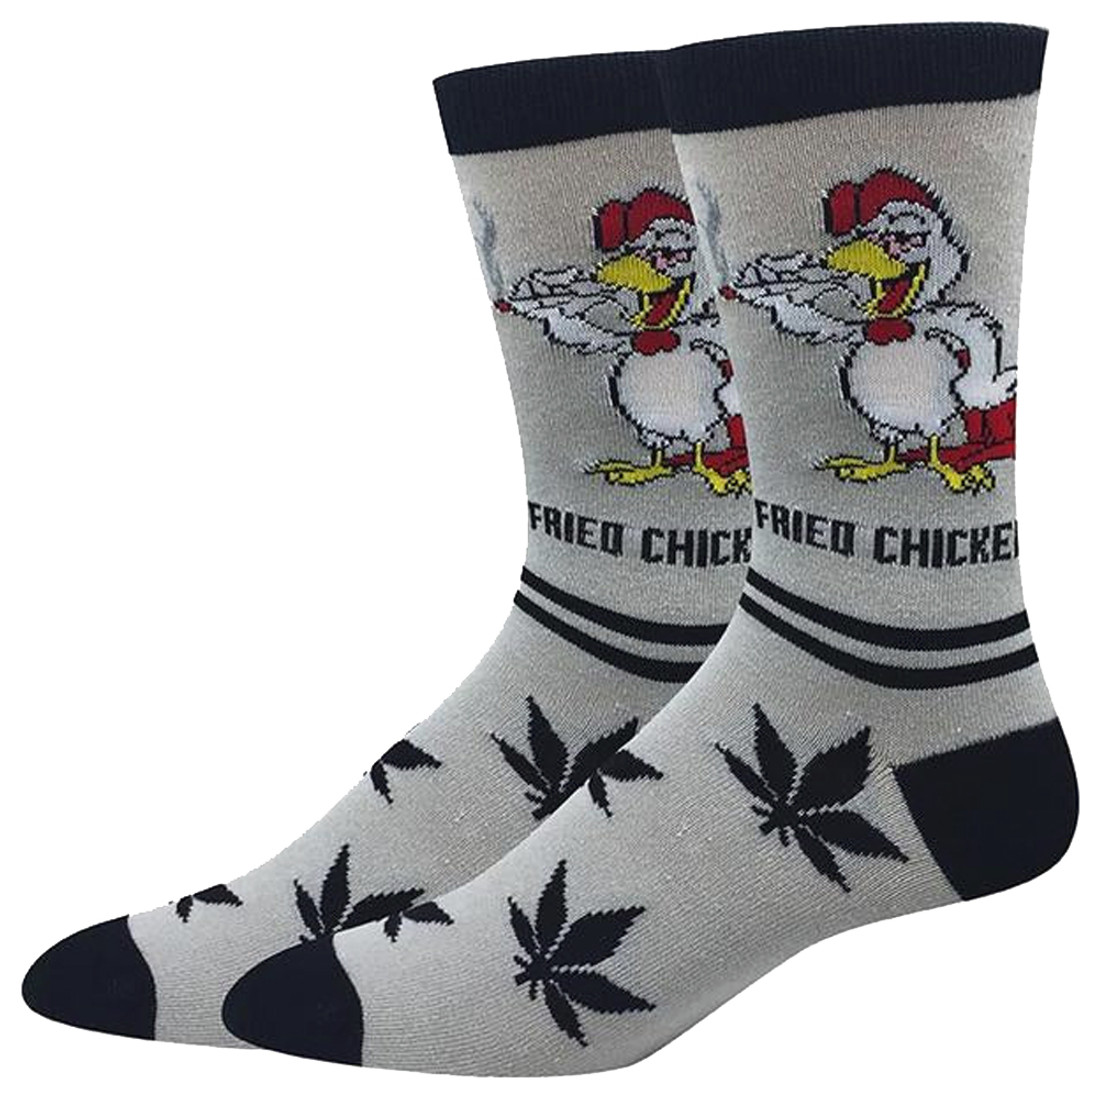 Fried Chicken Men's Socks